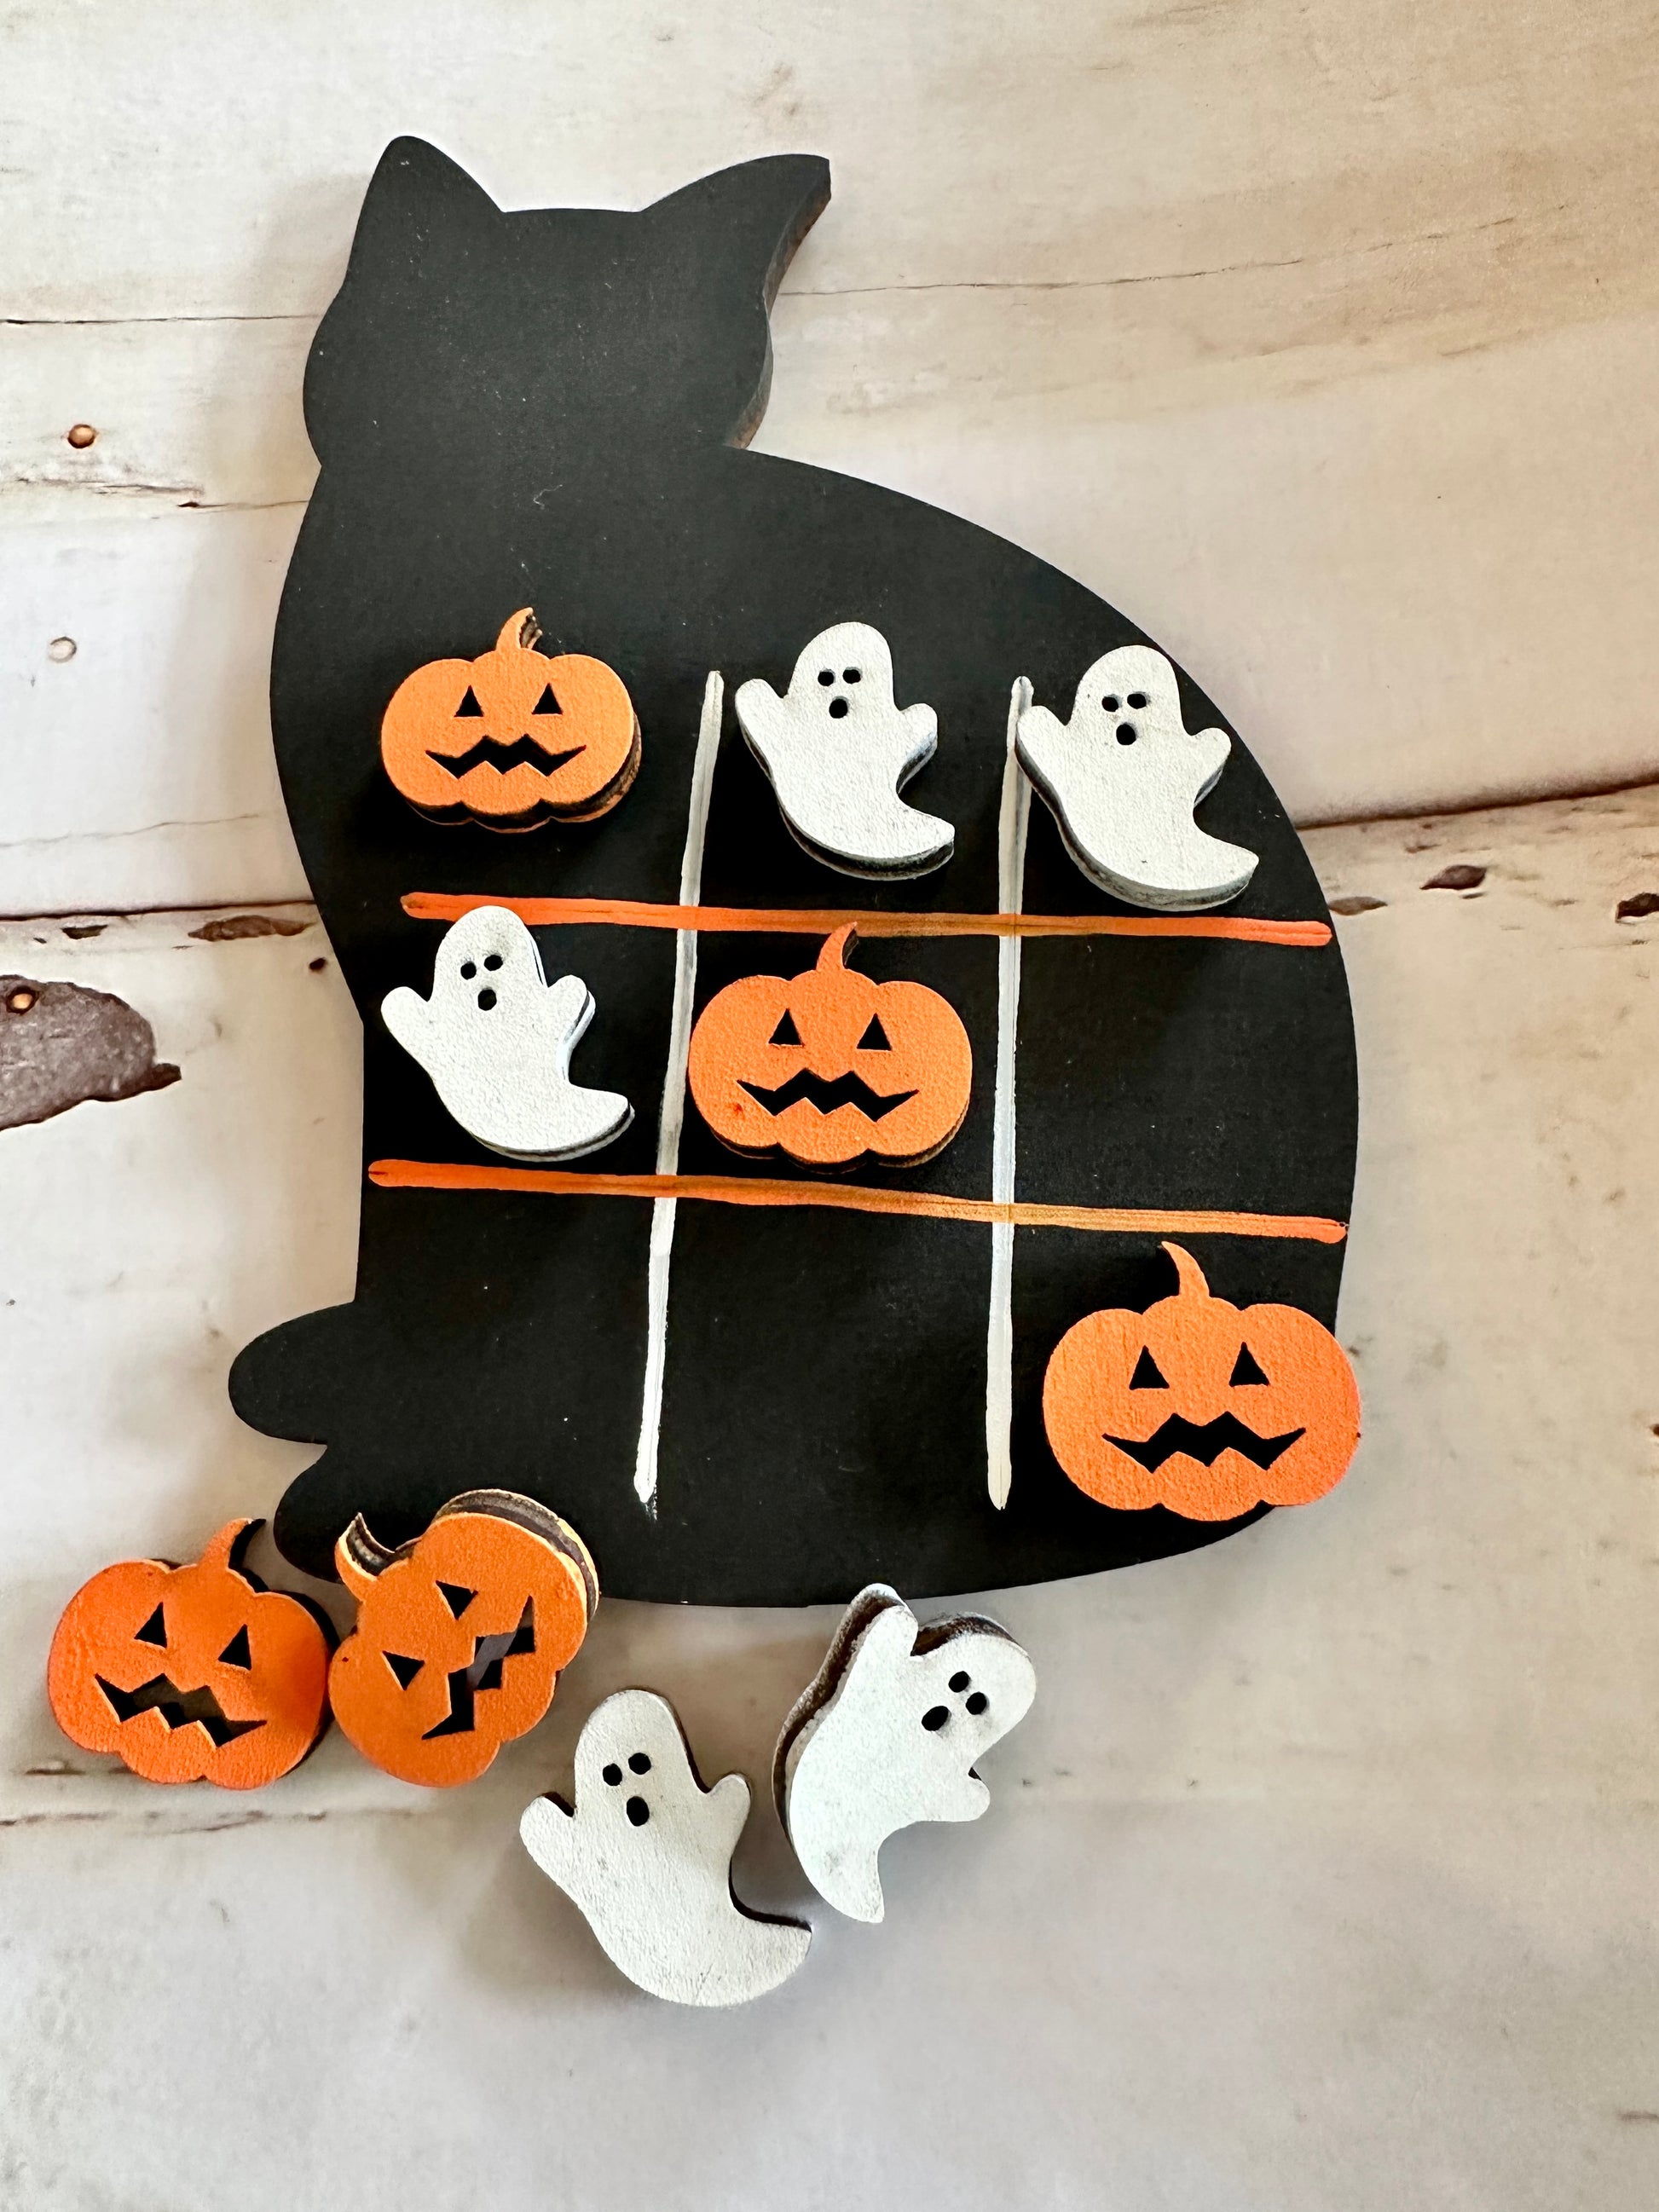 Halloween Tic-Tac-Toe craft activity guide